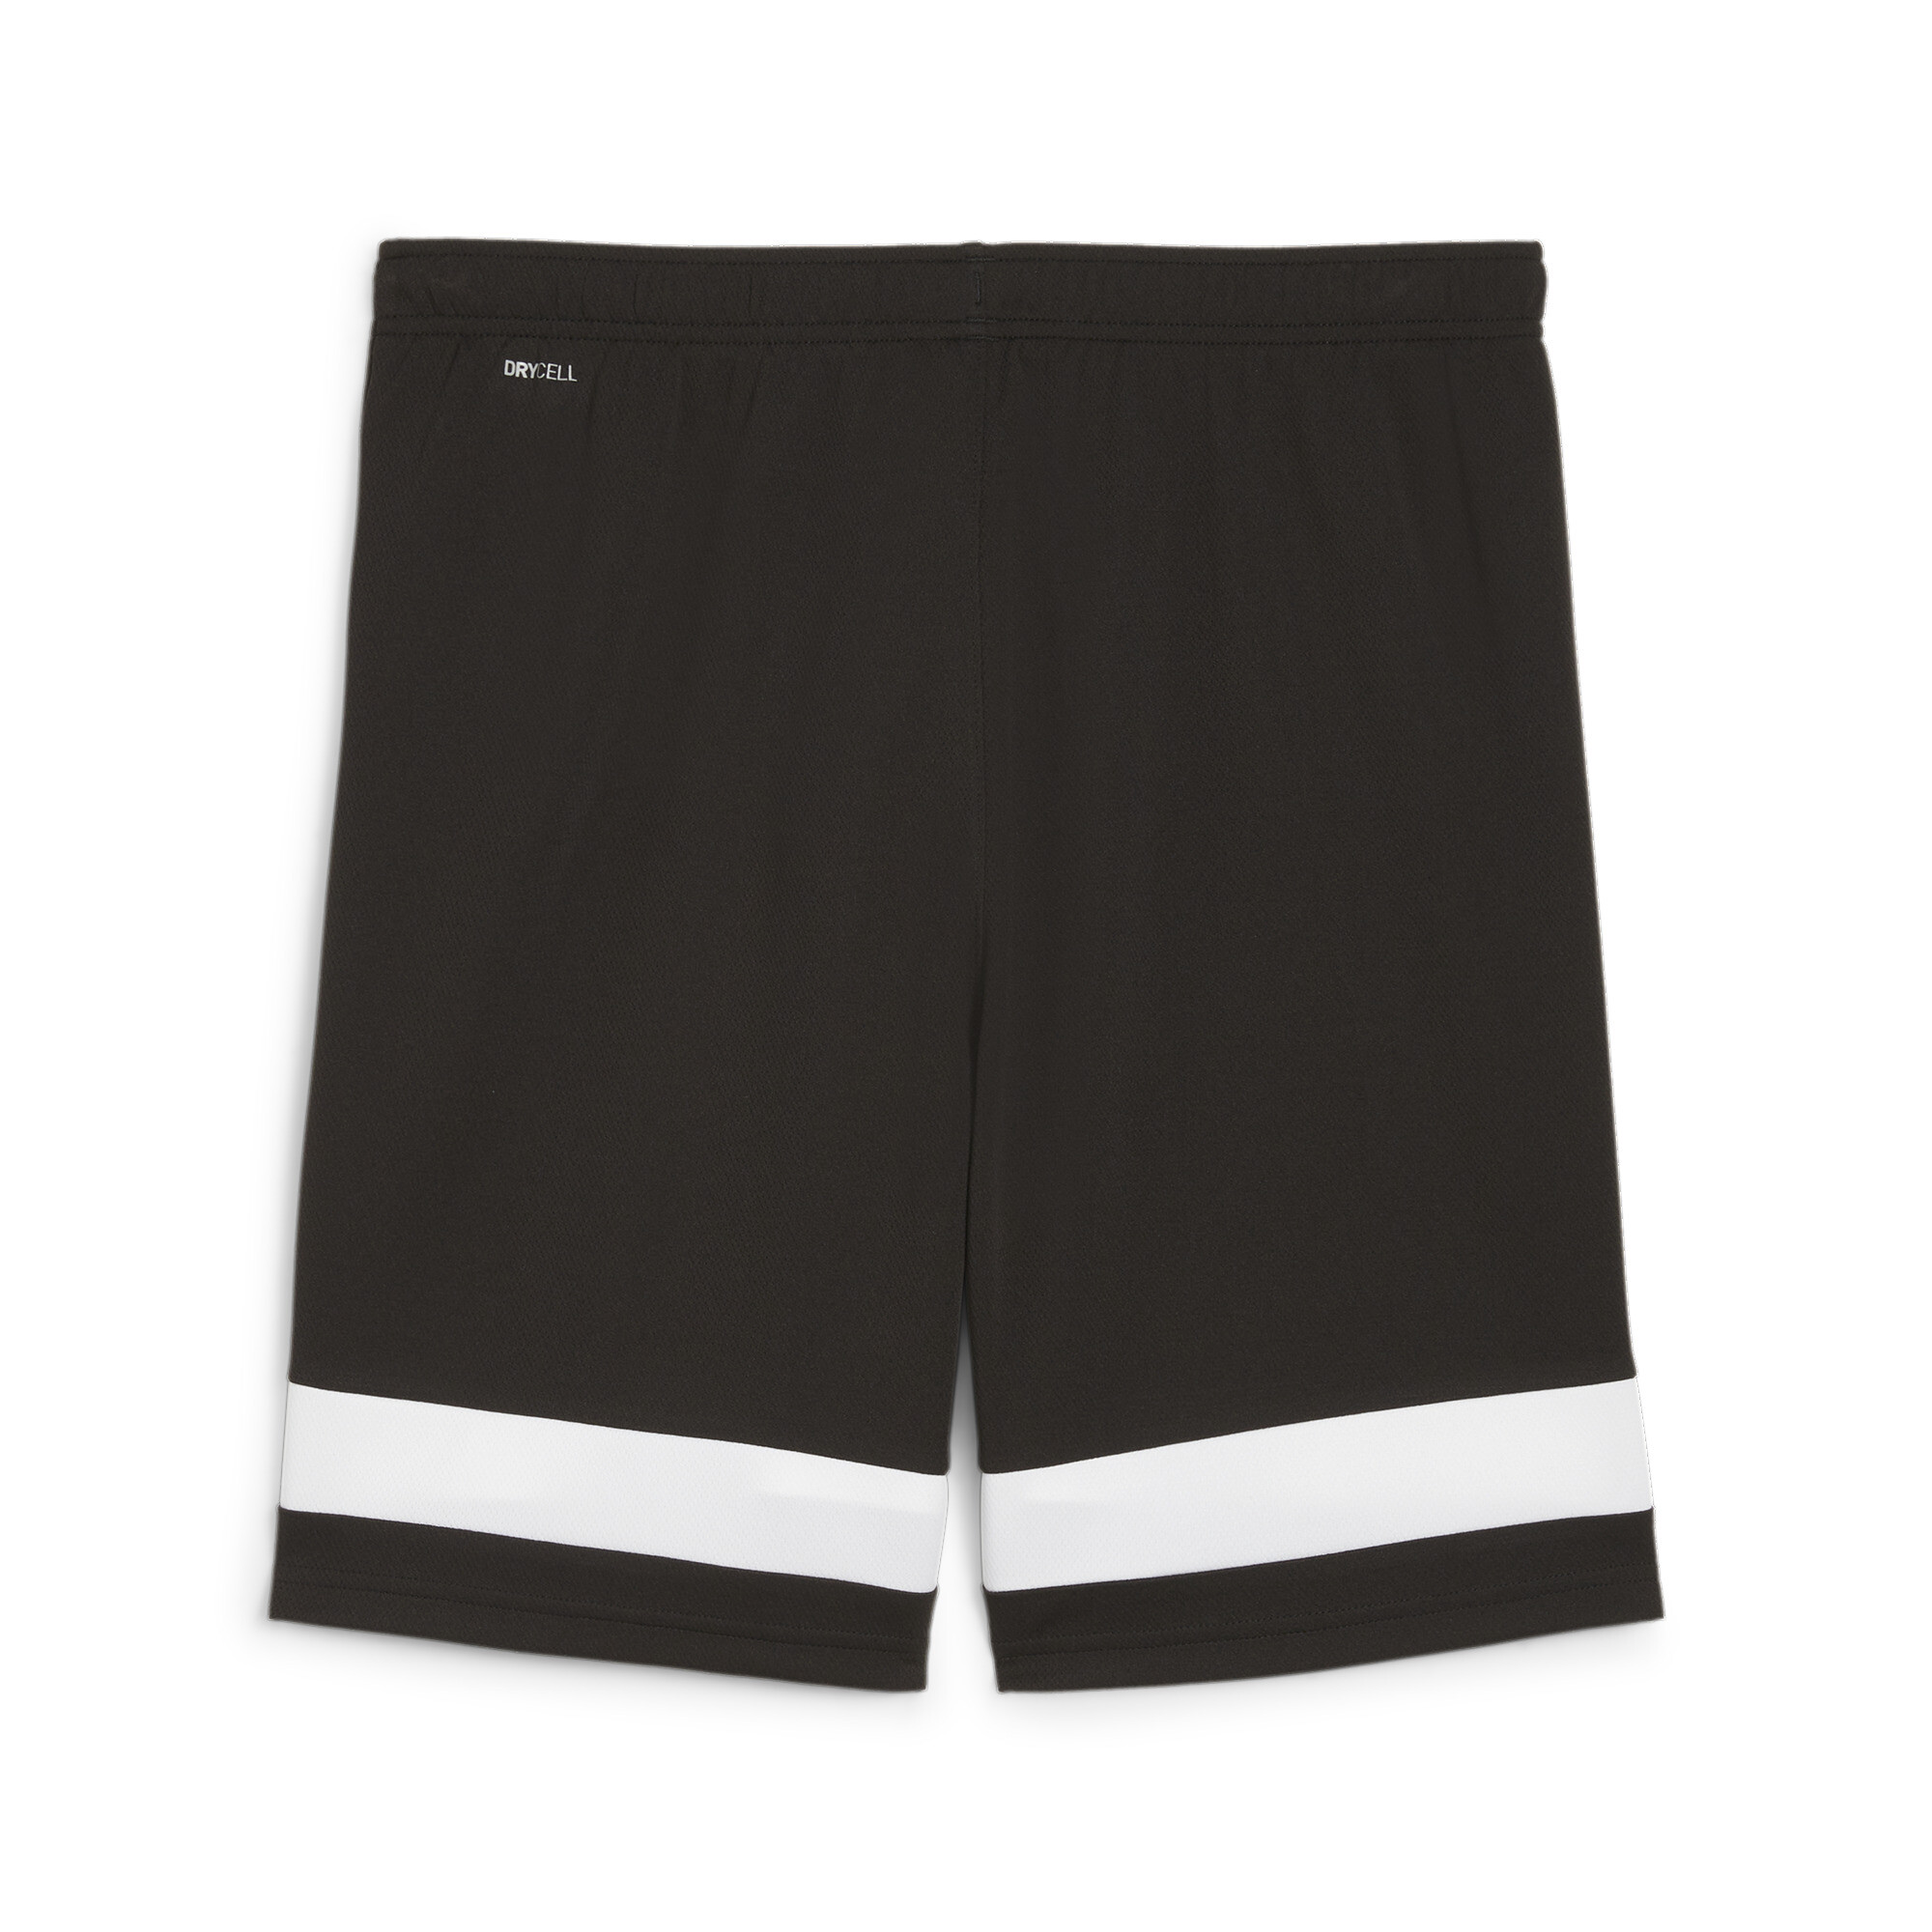 Men's PUMA IndividualRISE Football Shorts In Black, Size Medium